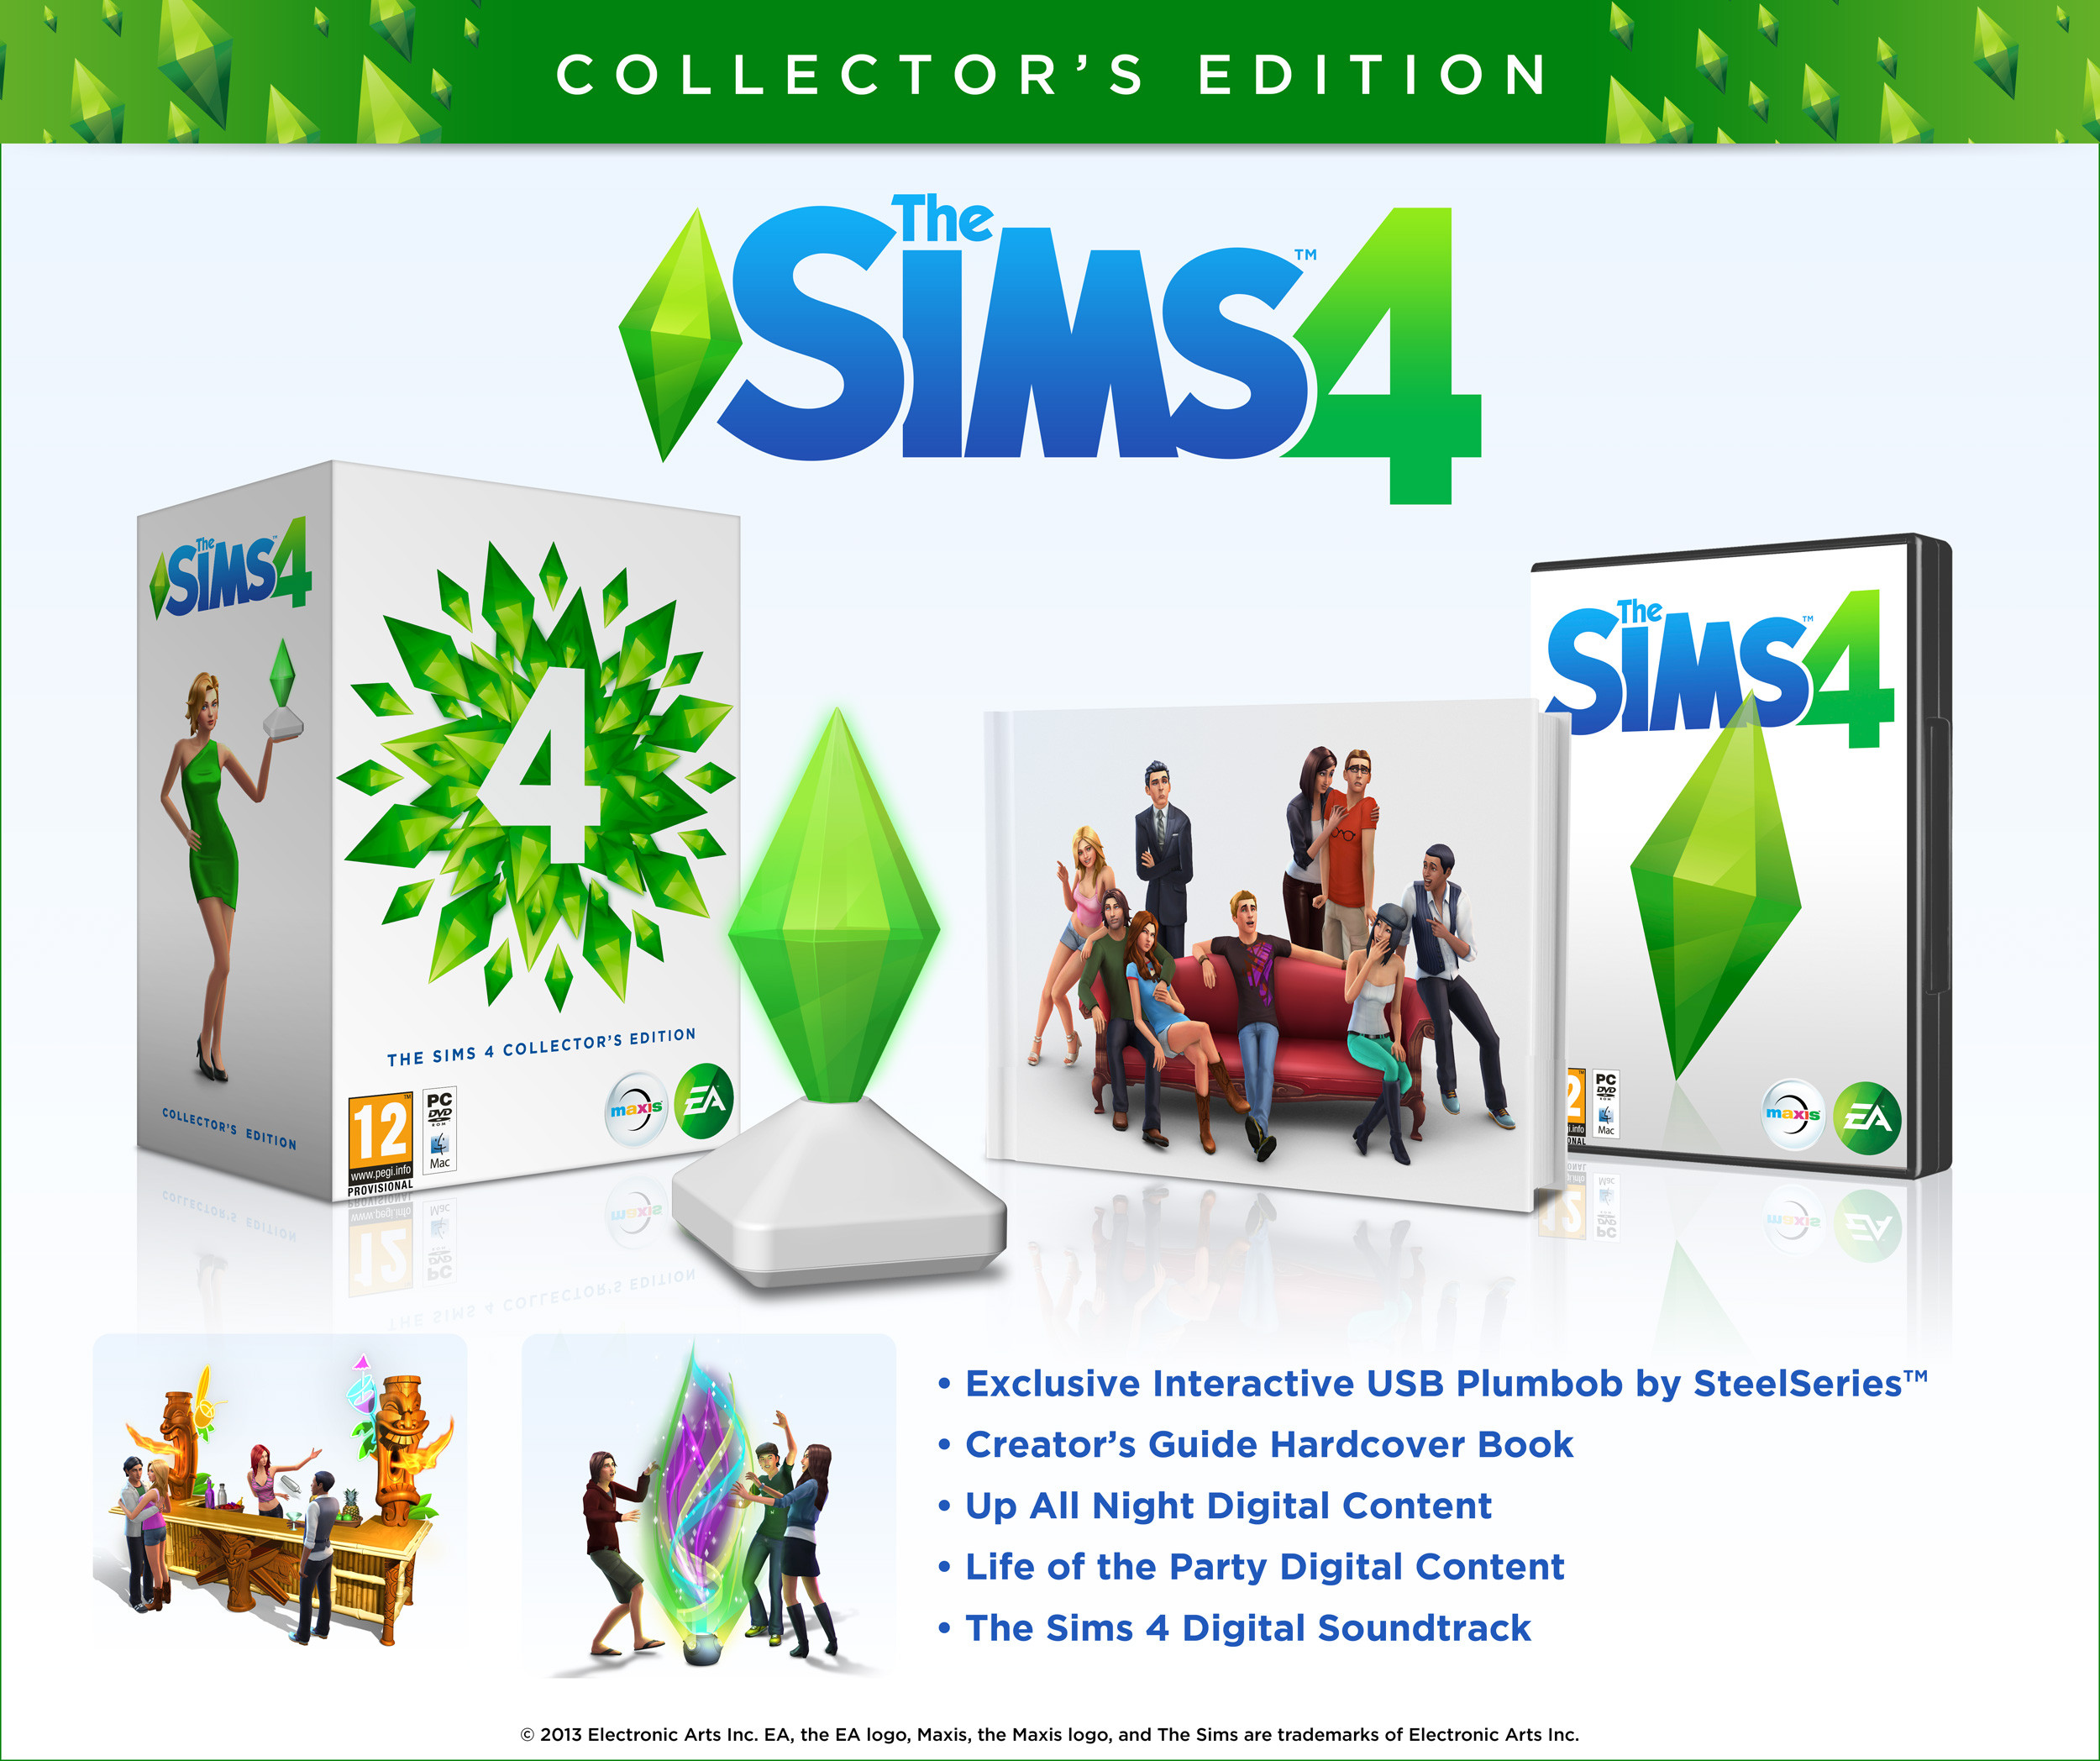 UPDATE: The Sims 4 Fact Sheet